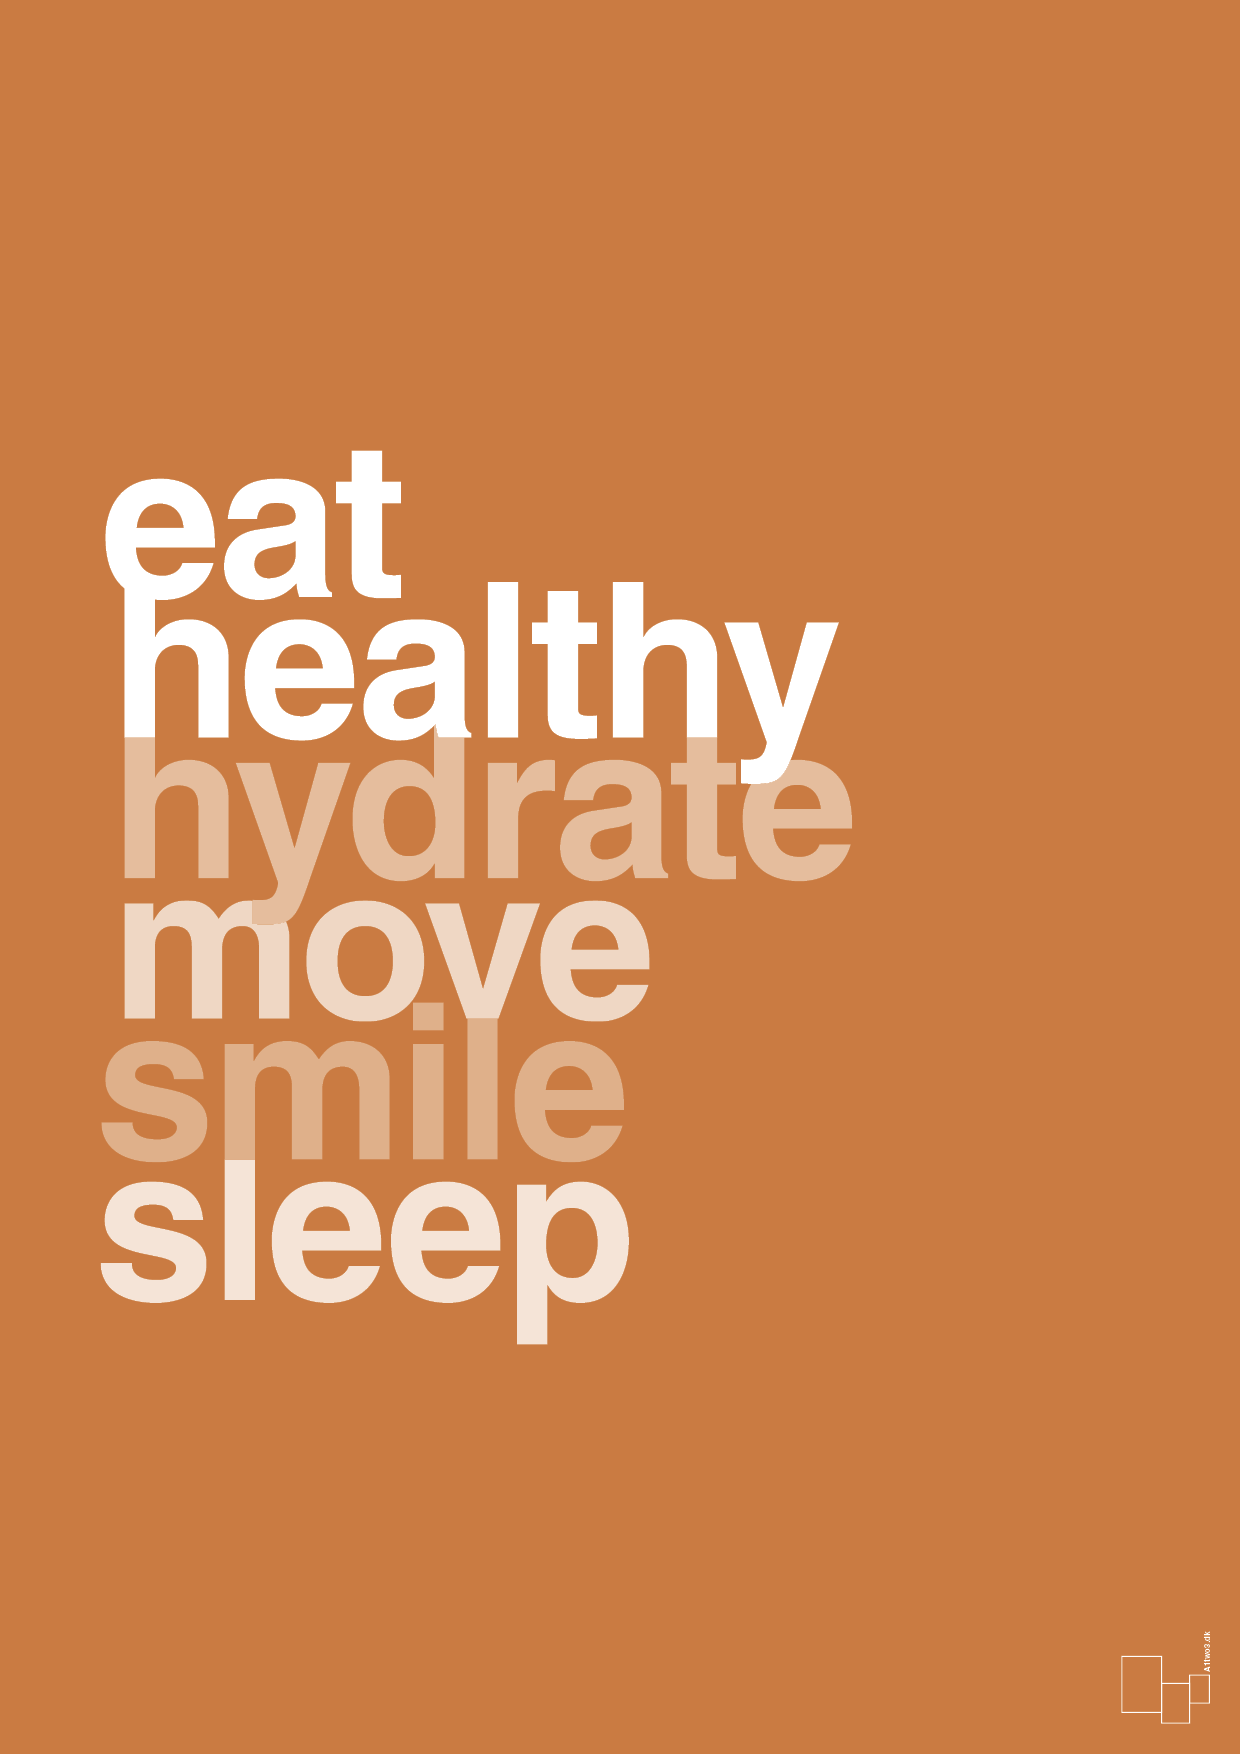 eat healthy hydrate move smile sleep - Plakat med Ordsprog i Rumba Orange